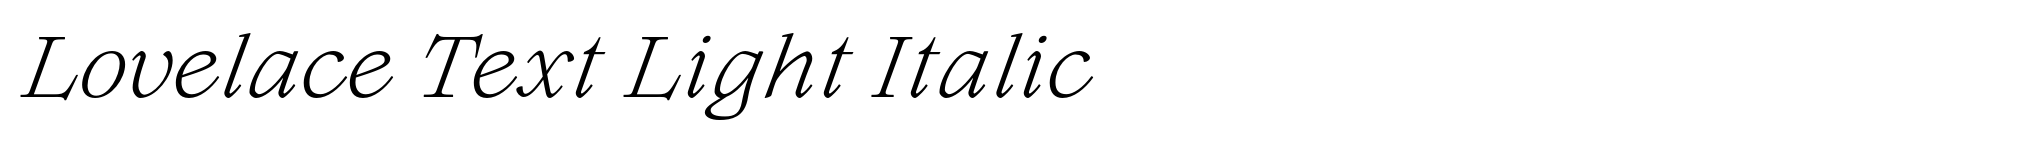 Lovelace Text Light Italic image